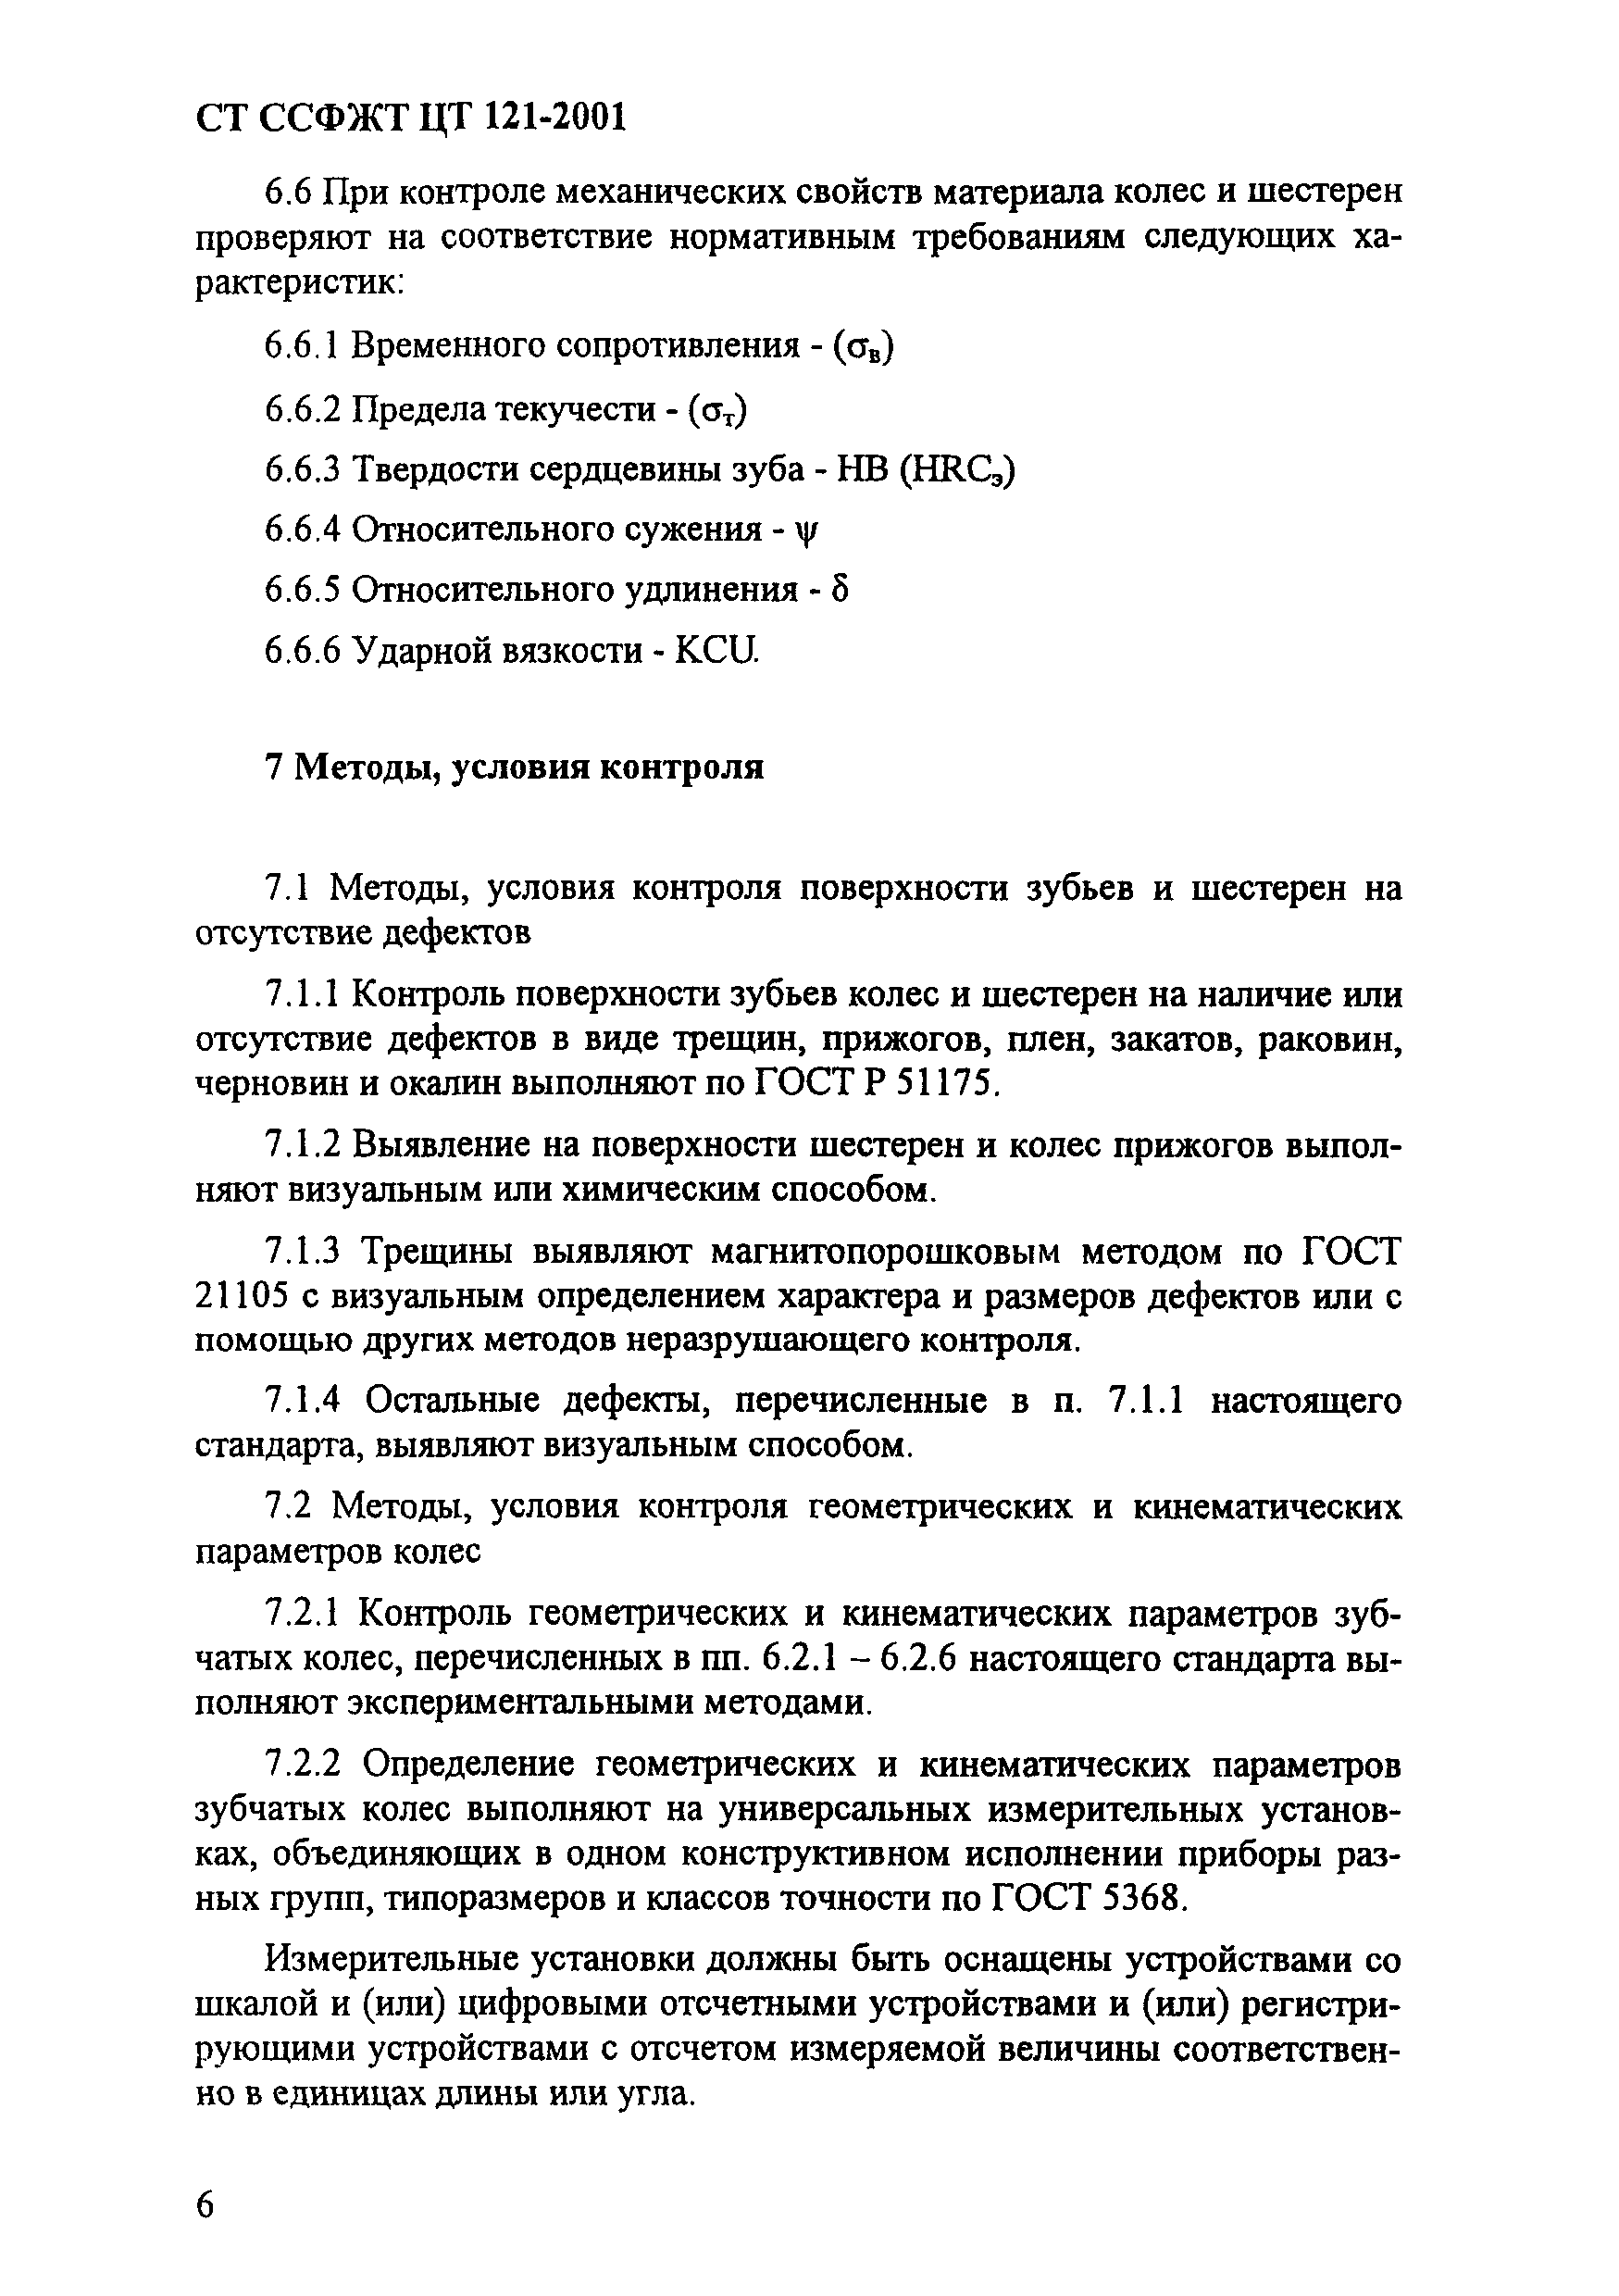 СТ ССФЖТ ЦТ-121-2001